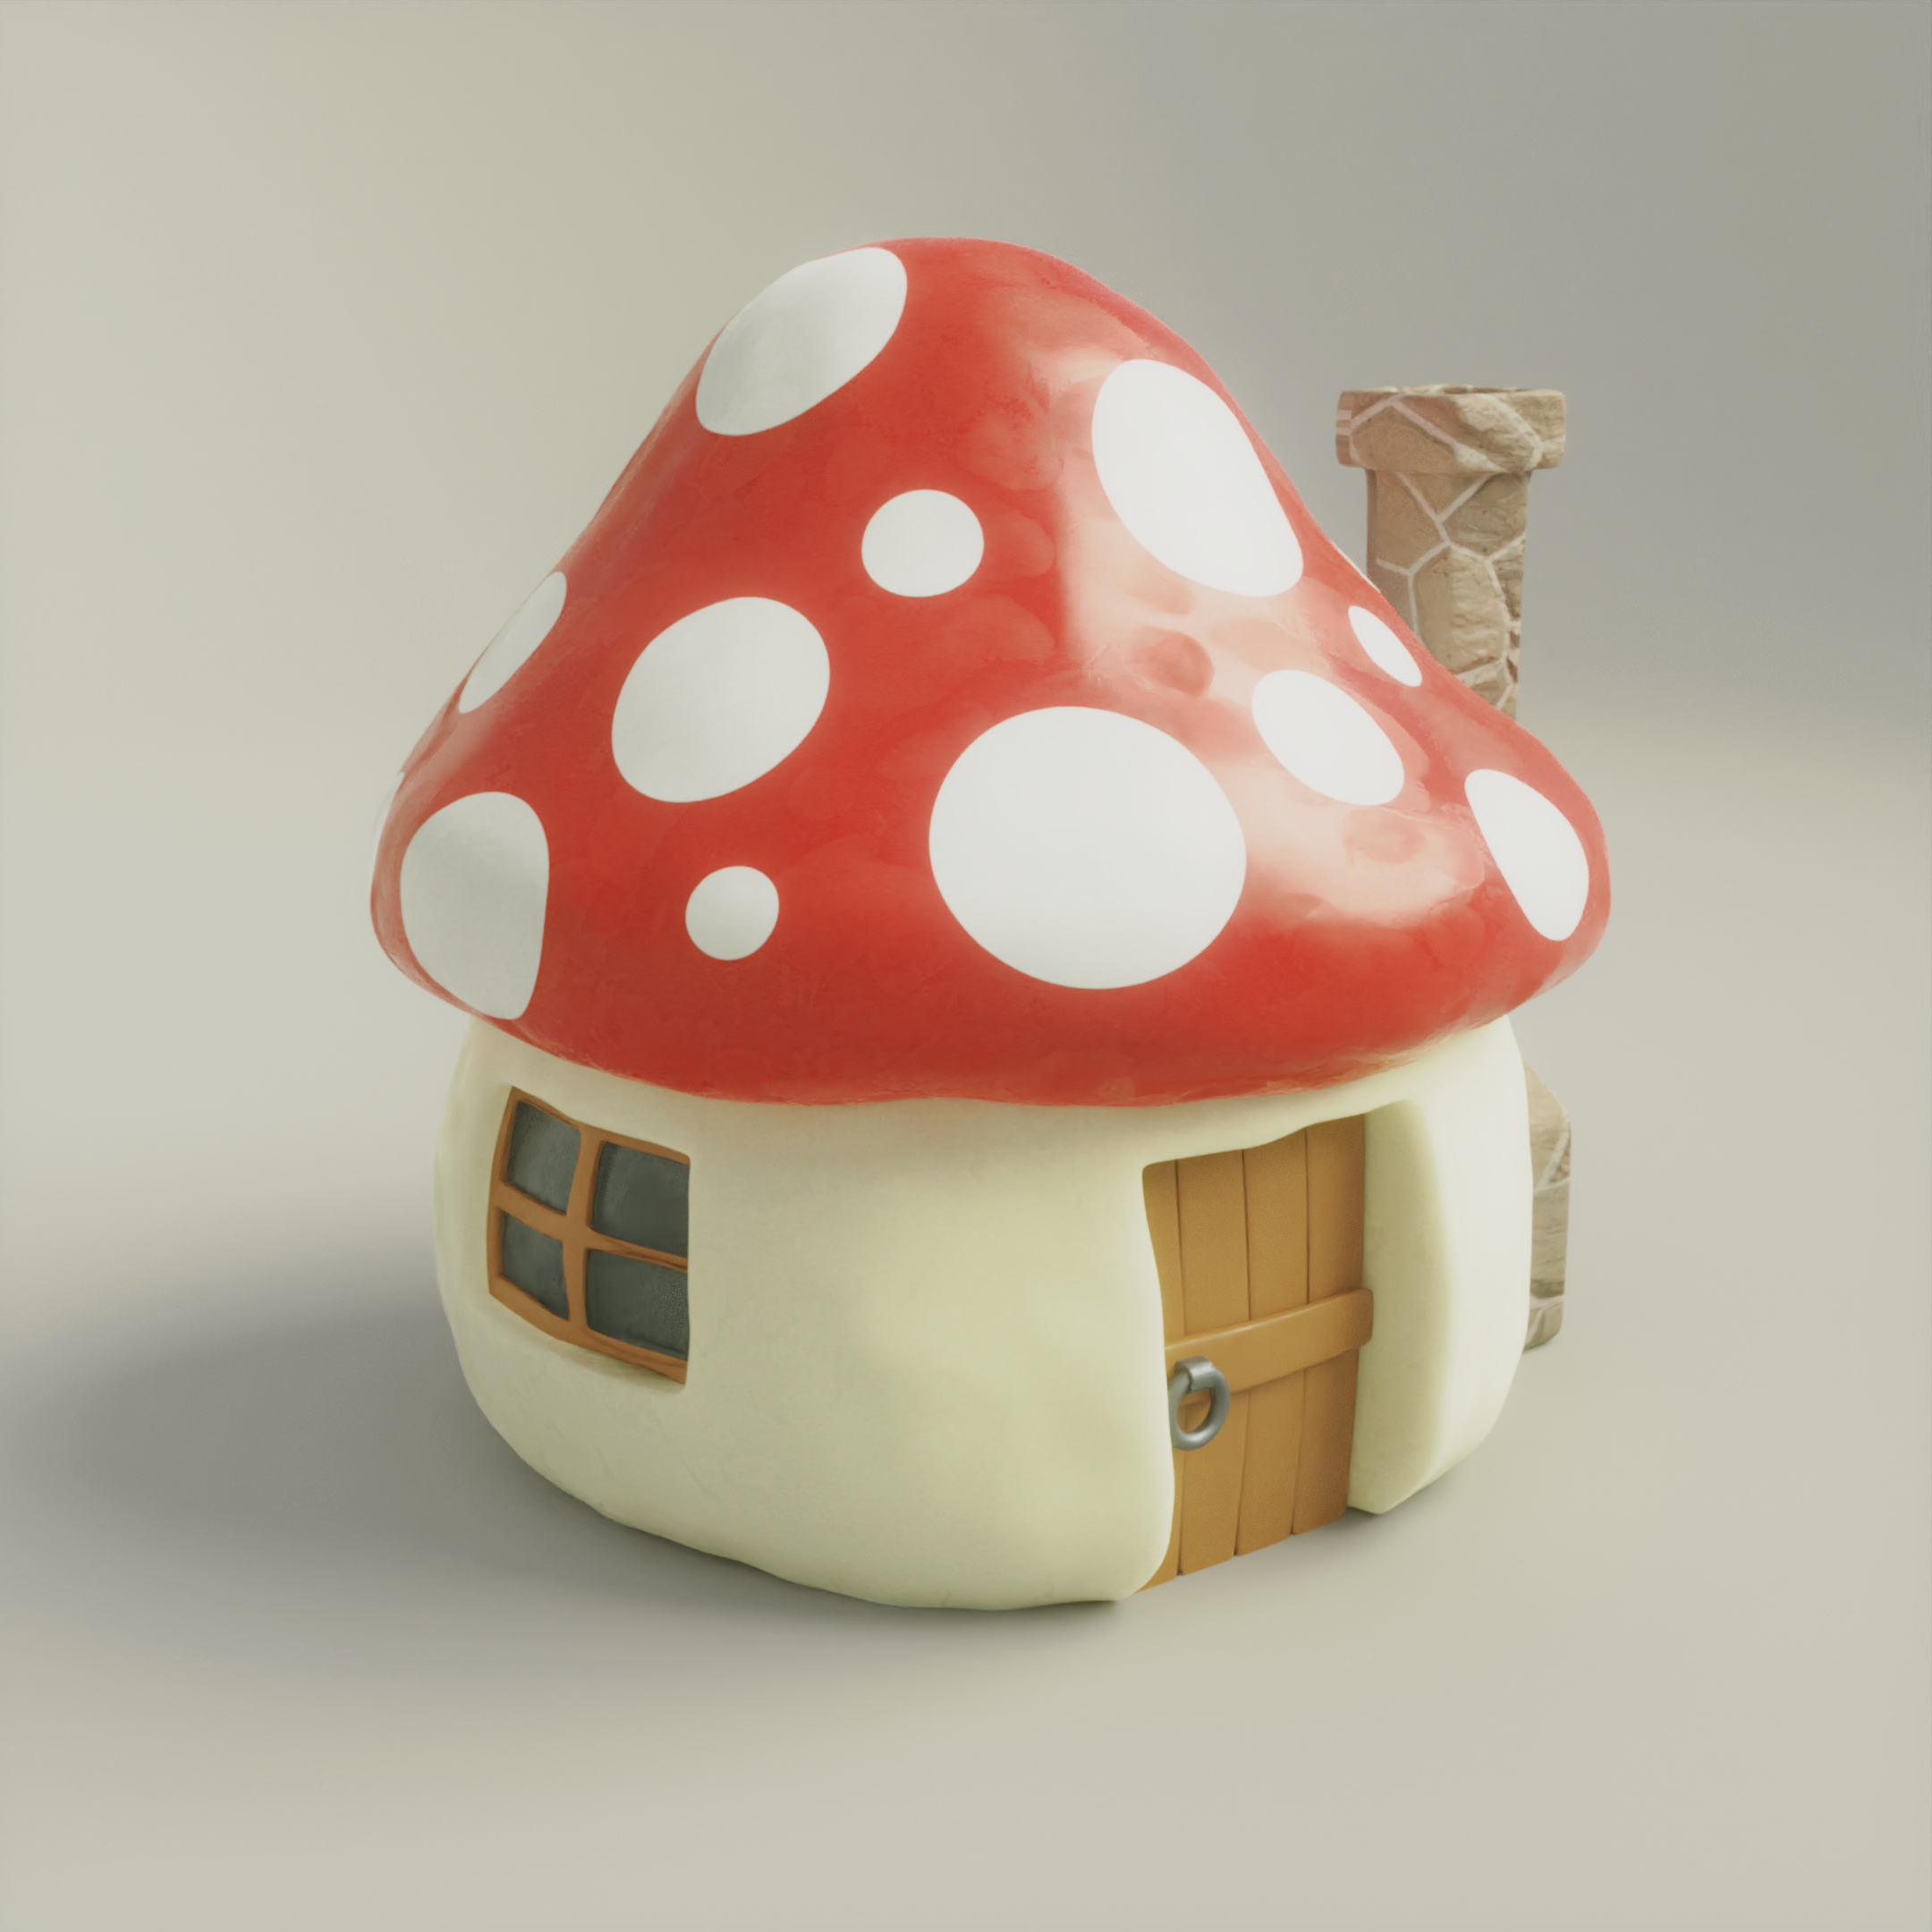 Mushroom home preview image 1